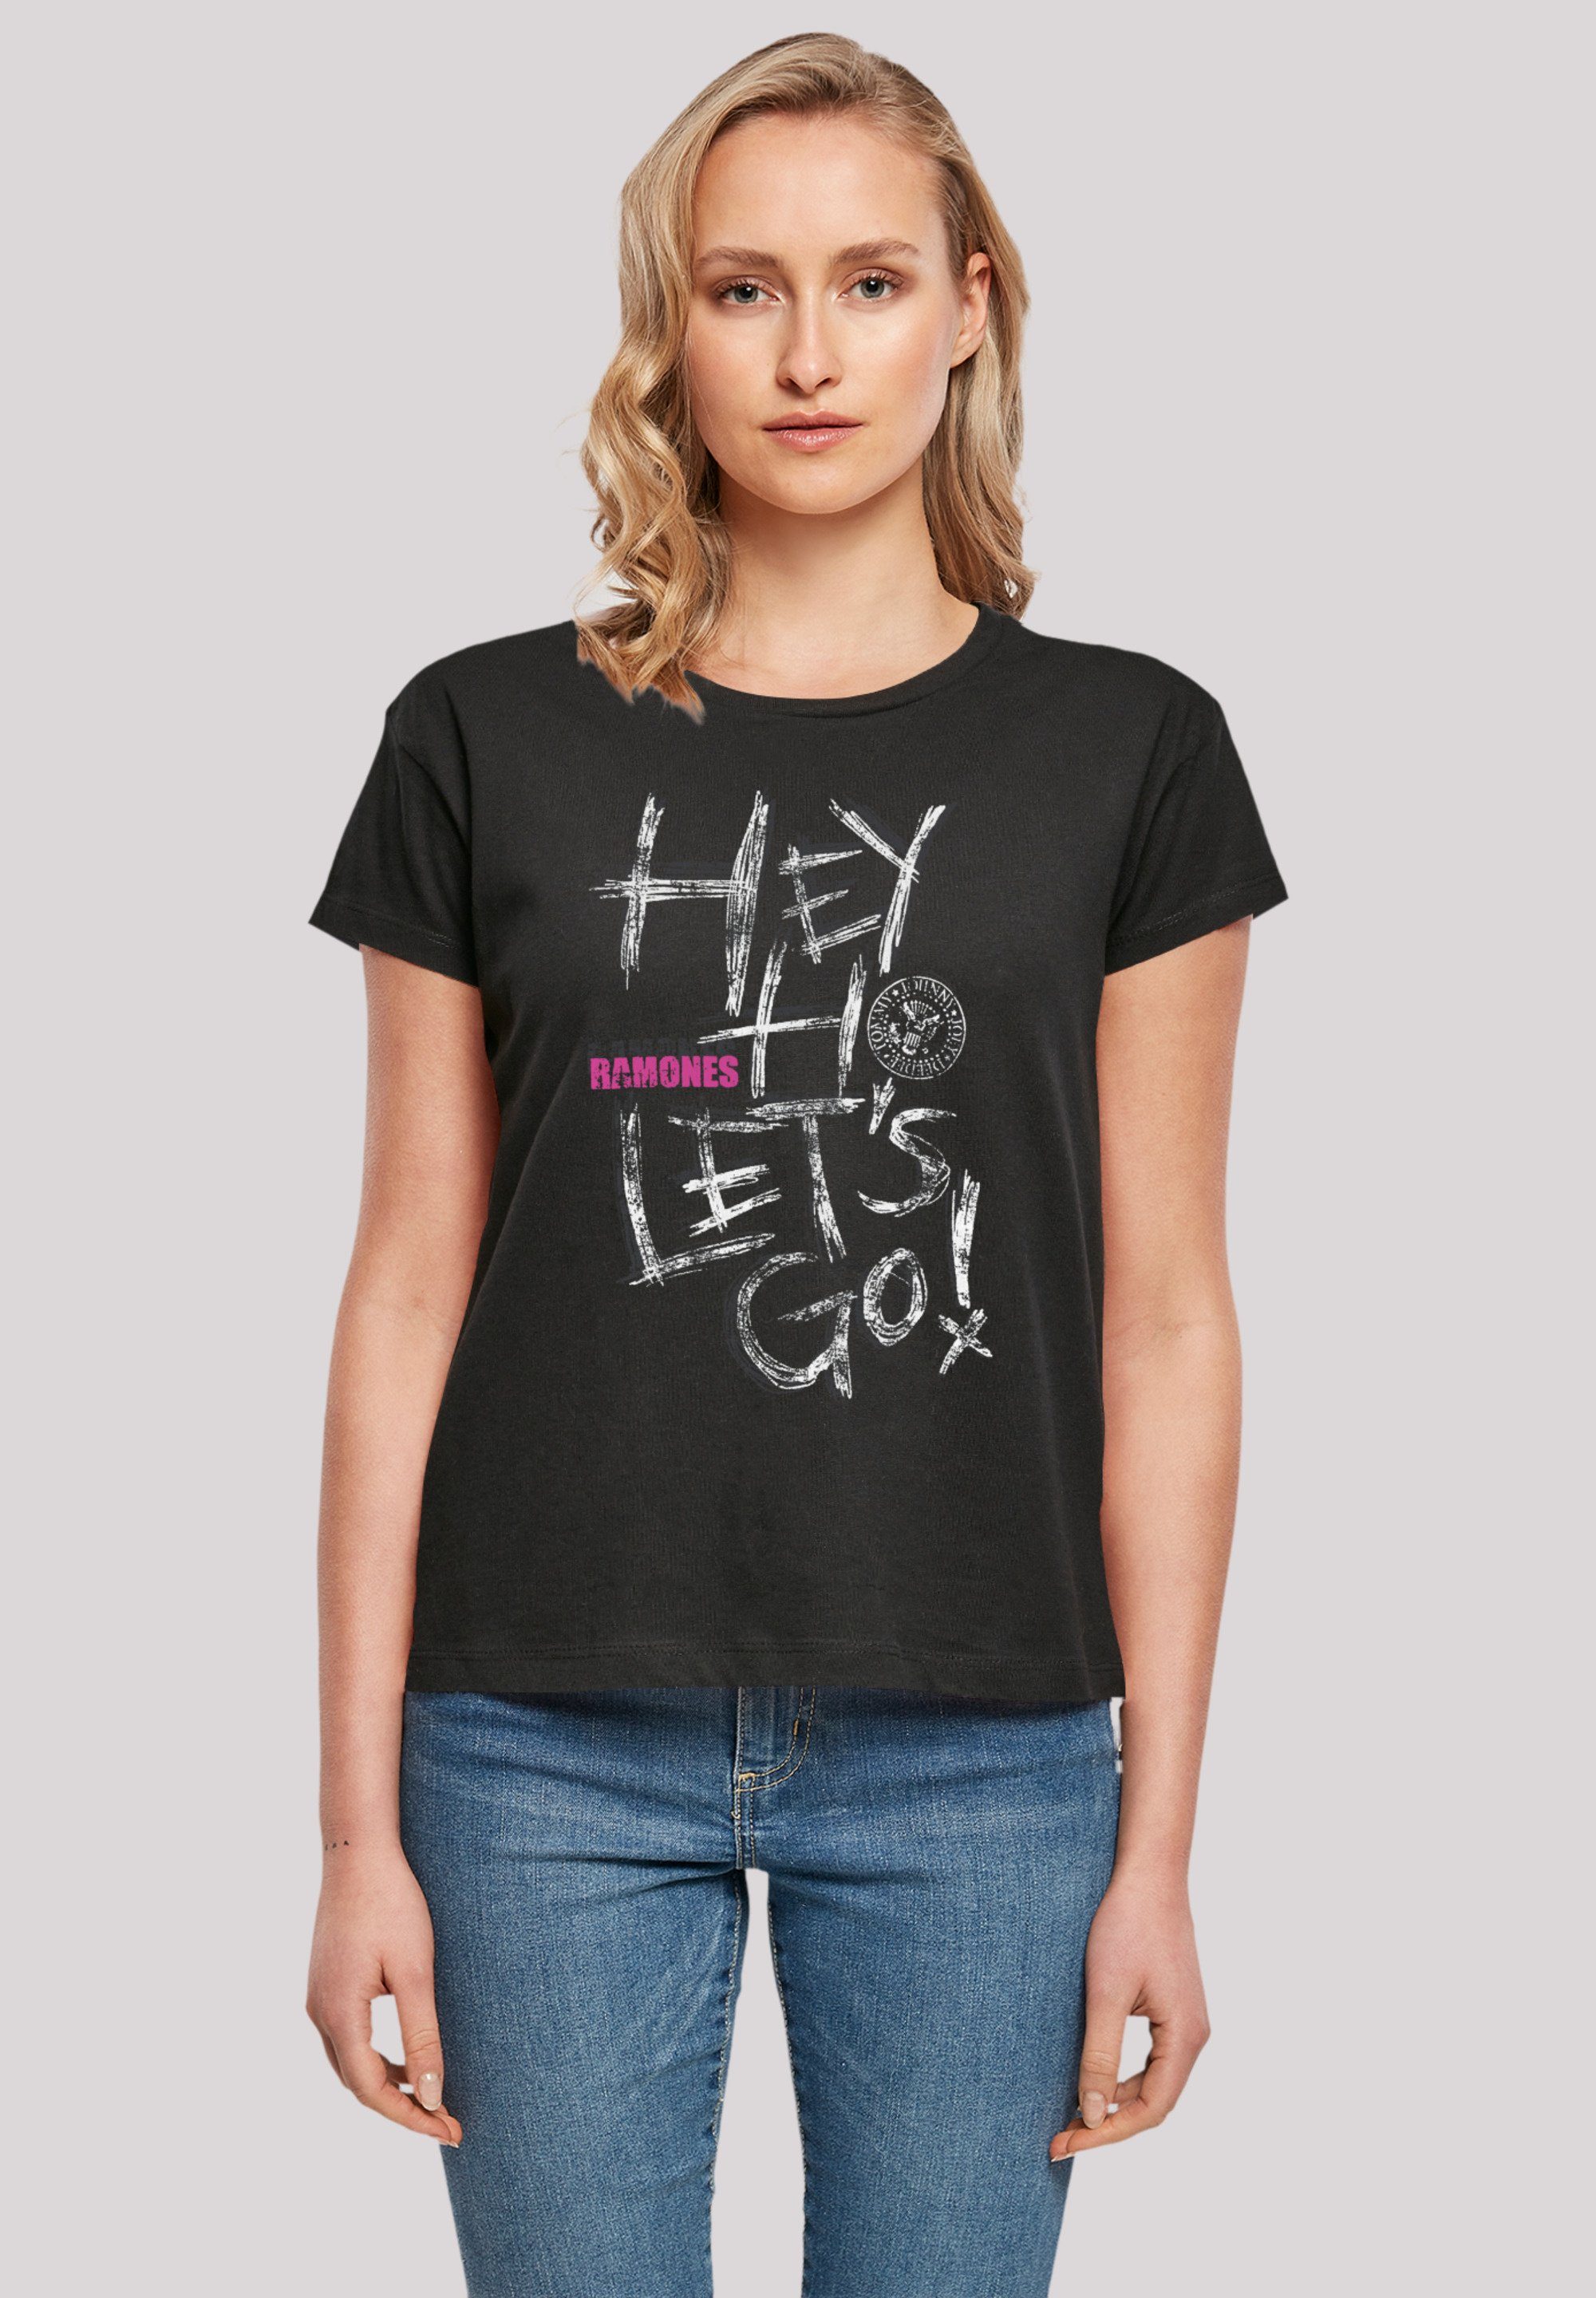 Hey Go T-Shirt Band Qualität, Rock Ho Band, Let's Musik Premium Rock-Musik F4NT4STIC Ramones